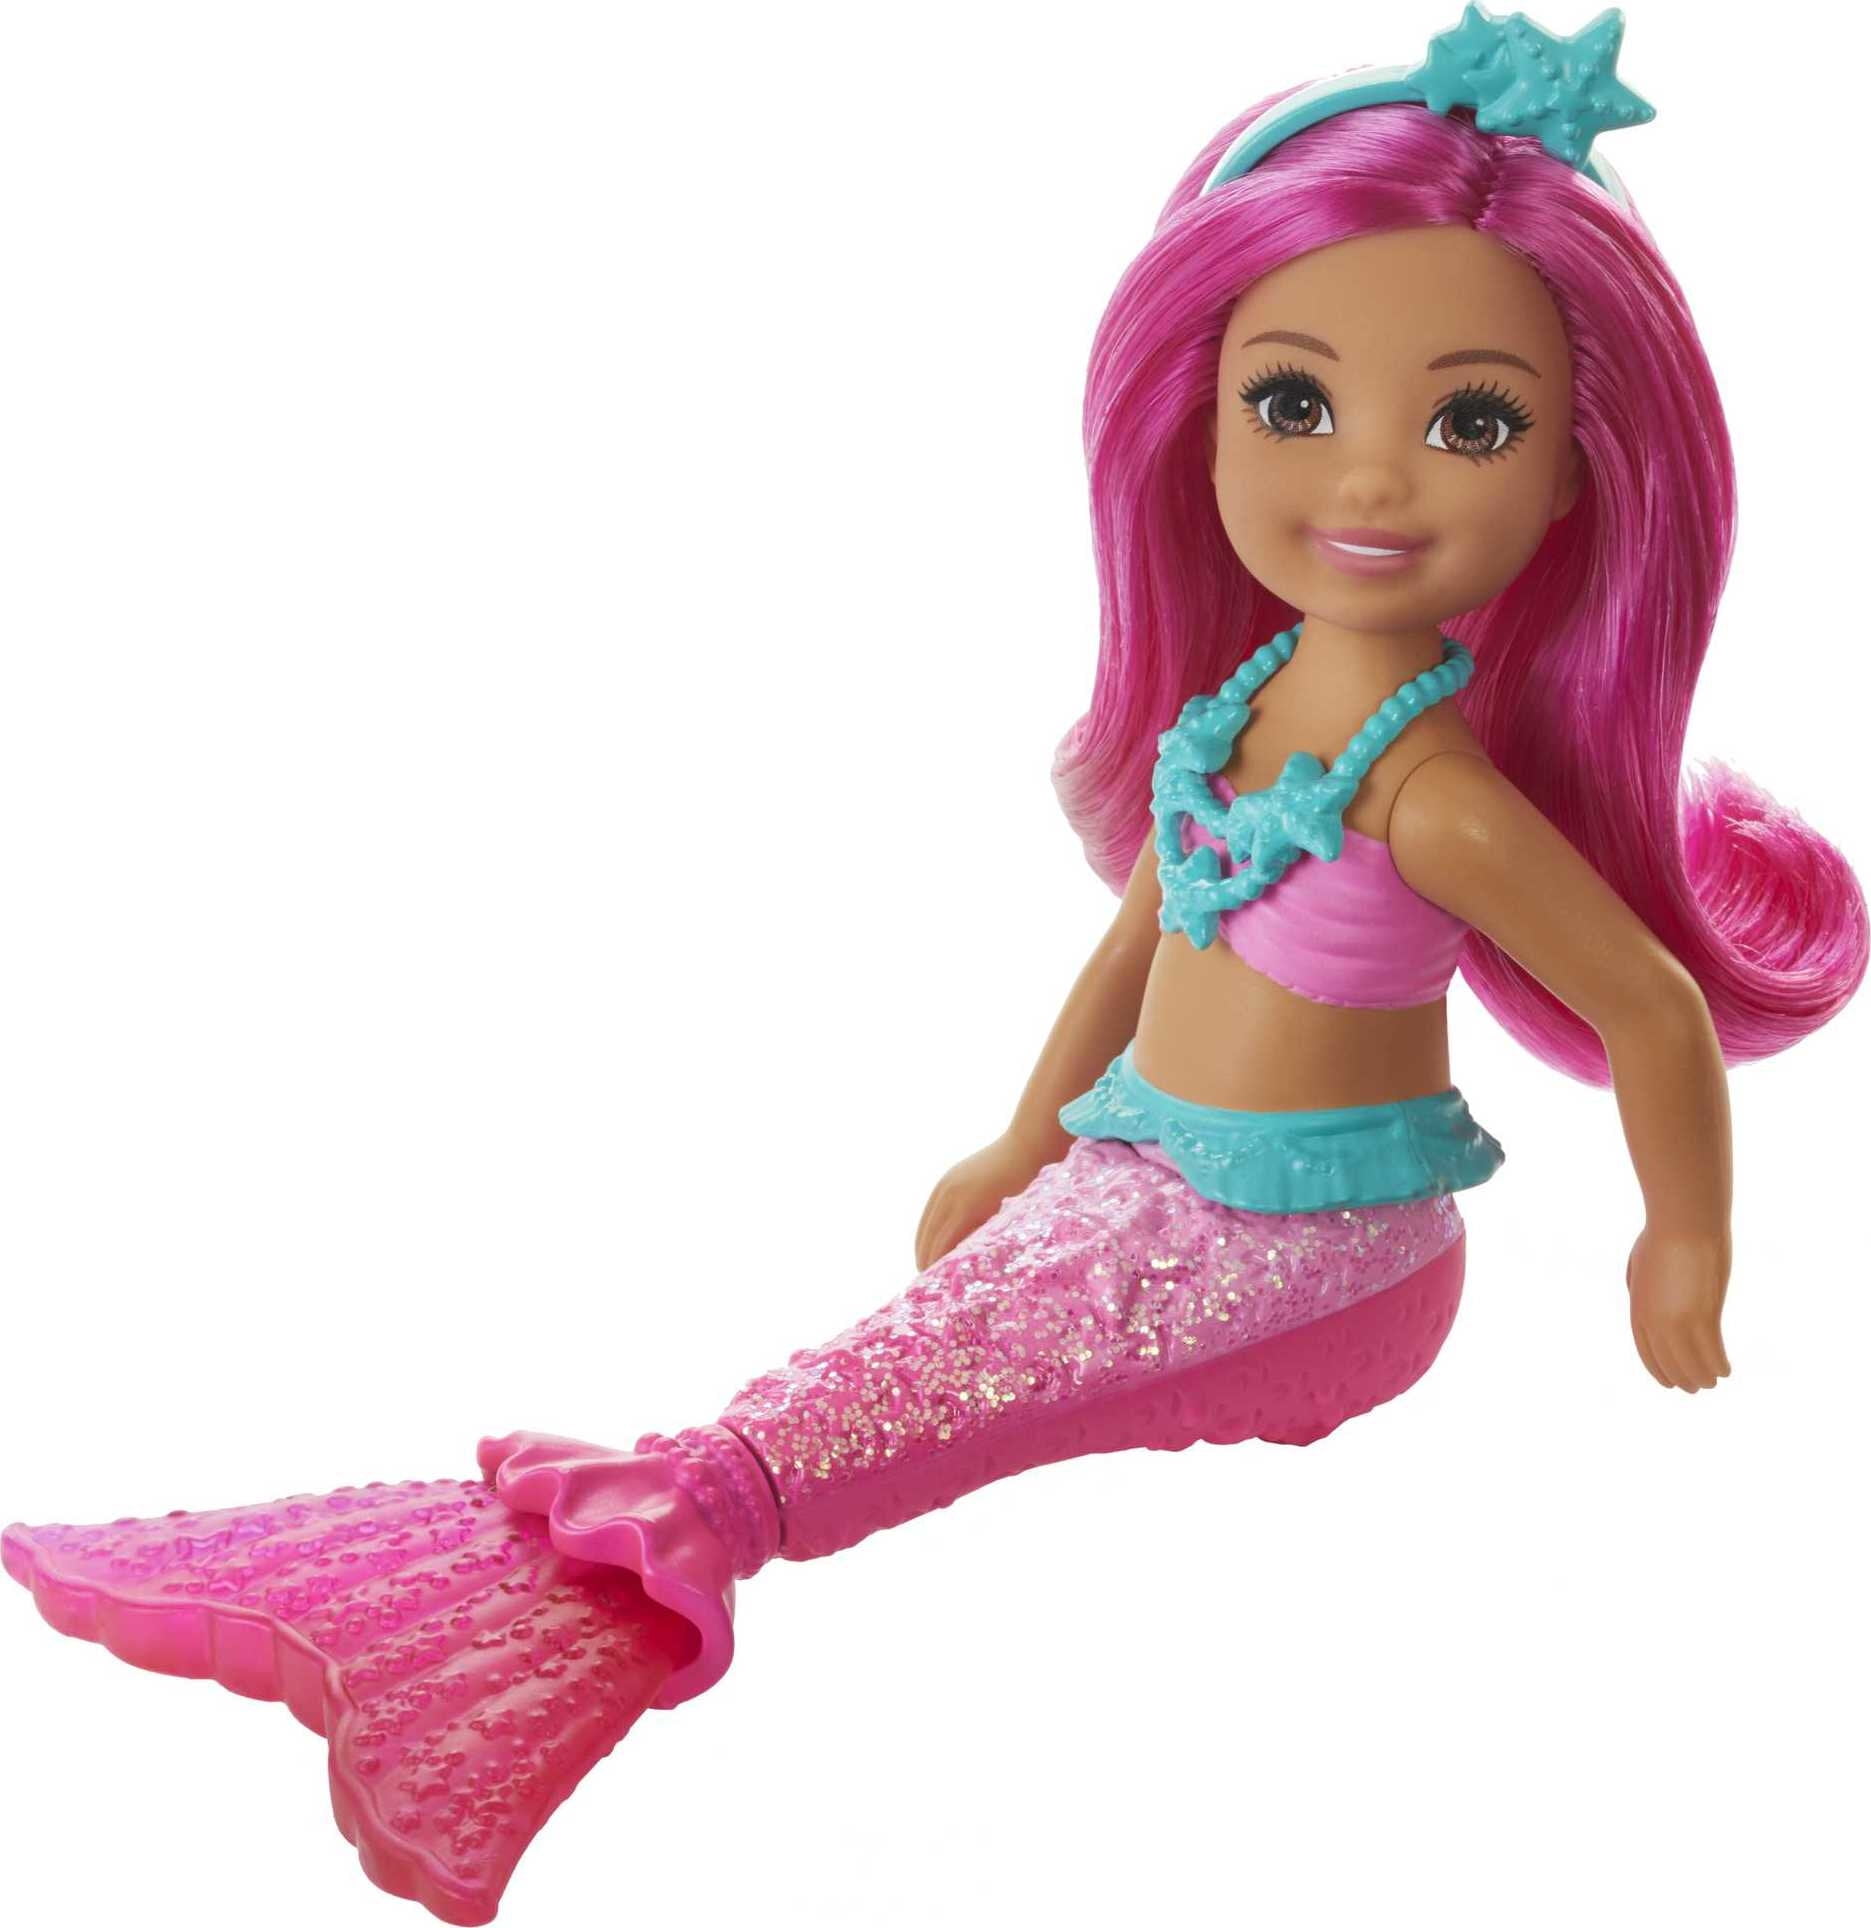 Barbie Dreamtopia Chelsea Mermaid Small Doll with Hair & Tail, Tiara Accessory (6.5-inch) - Walmart.com